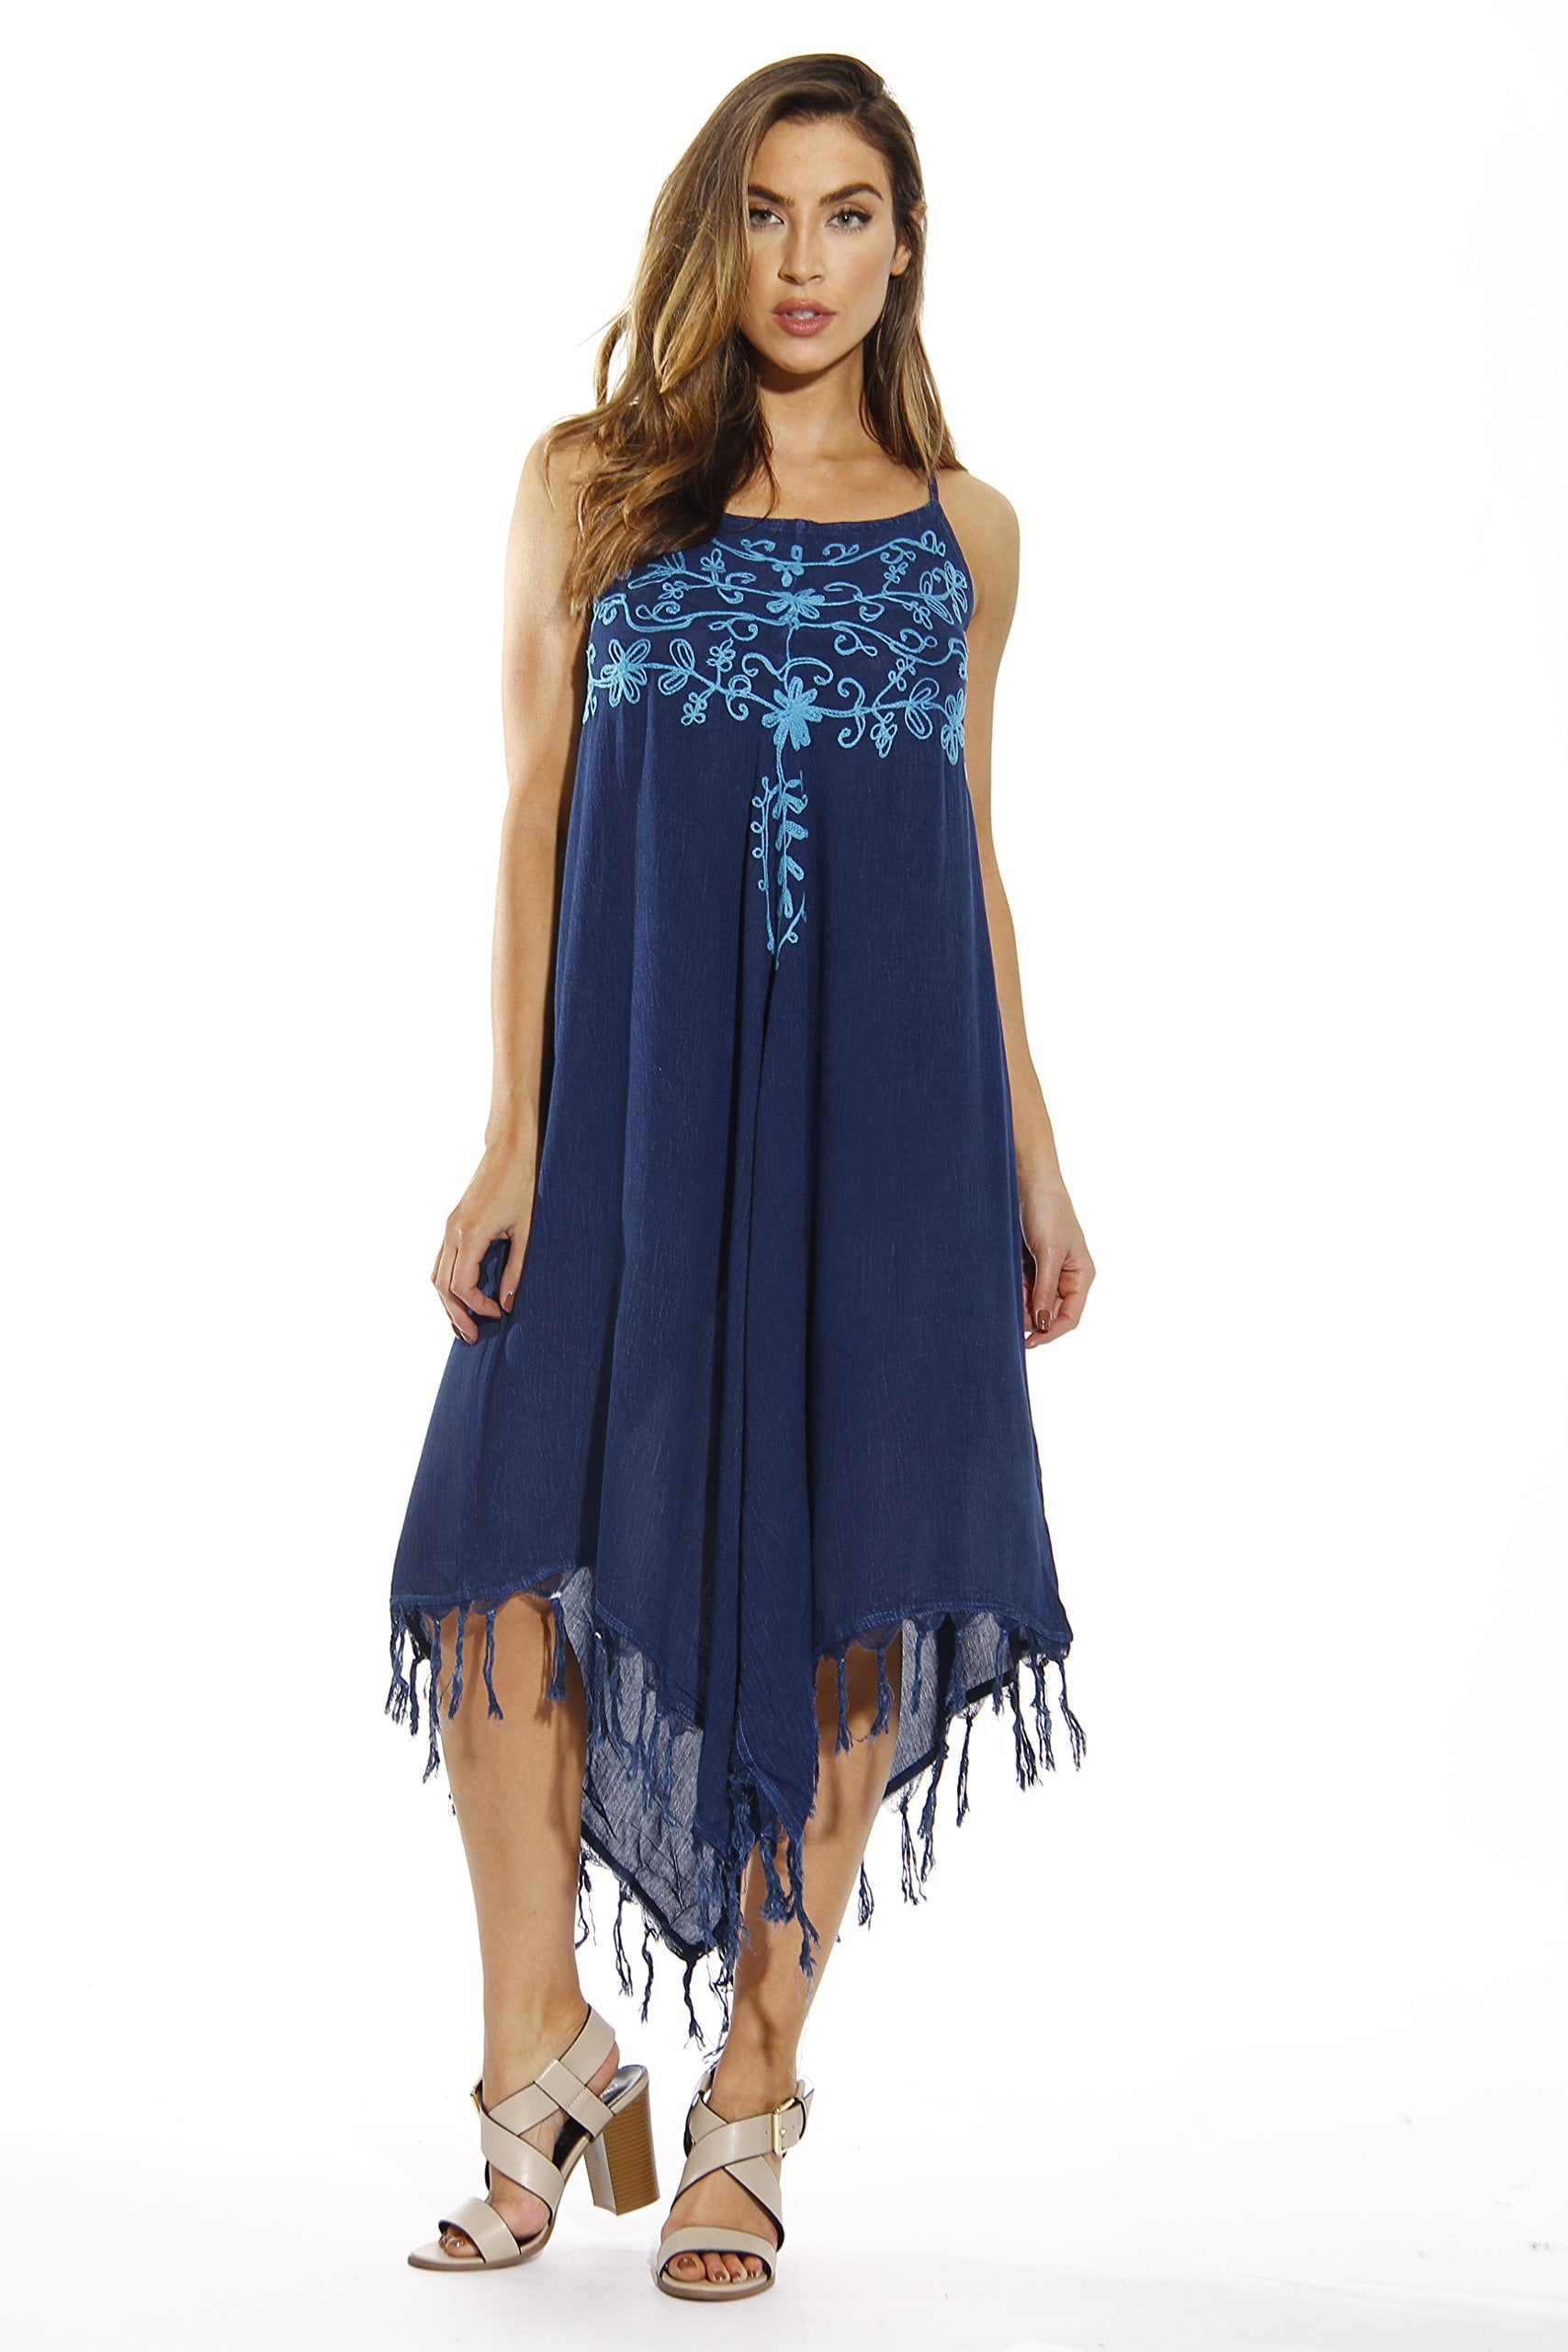 Riviera Sun Dress / Dresses for Women (Dark Denim with Turquoise ...